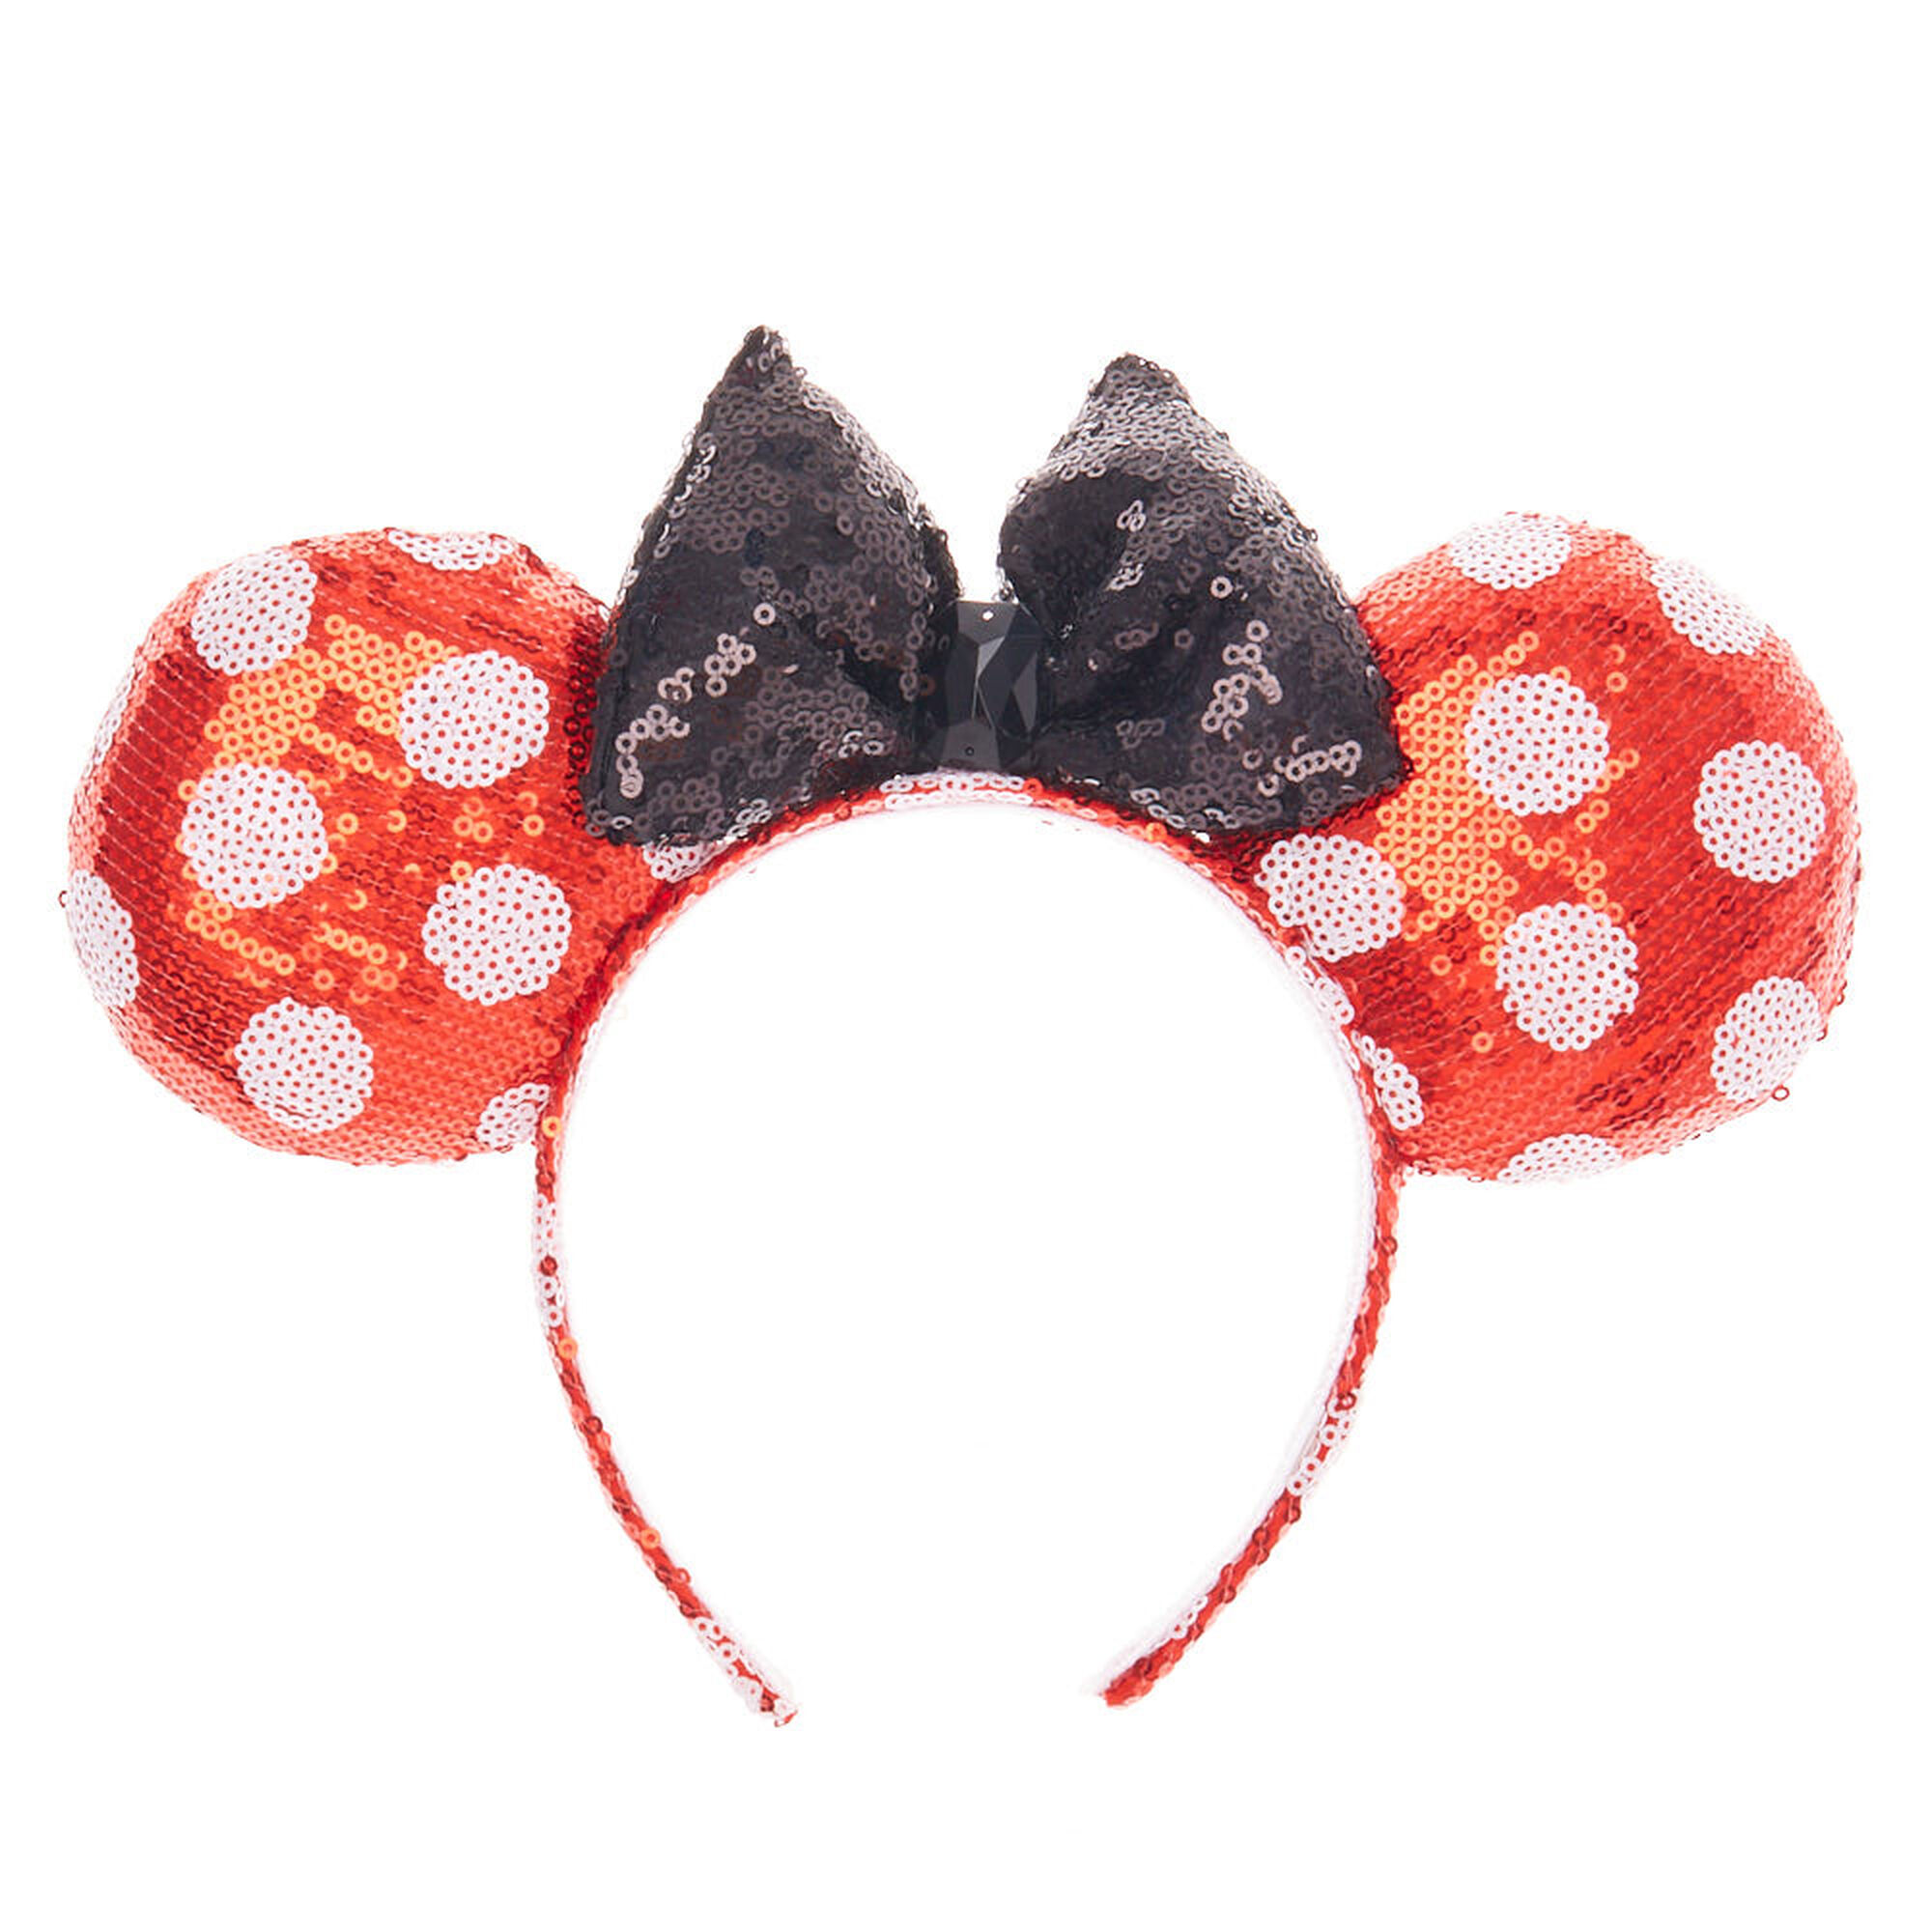 Disney Minnie Mouse Polka Dot Sequin Ears Headband for kids and